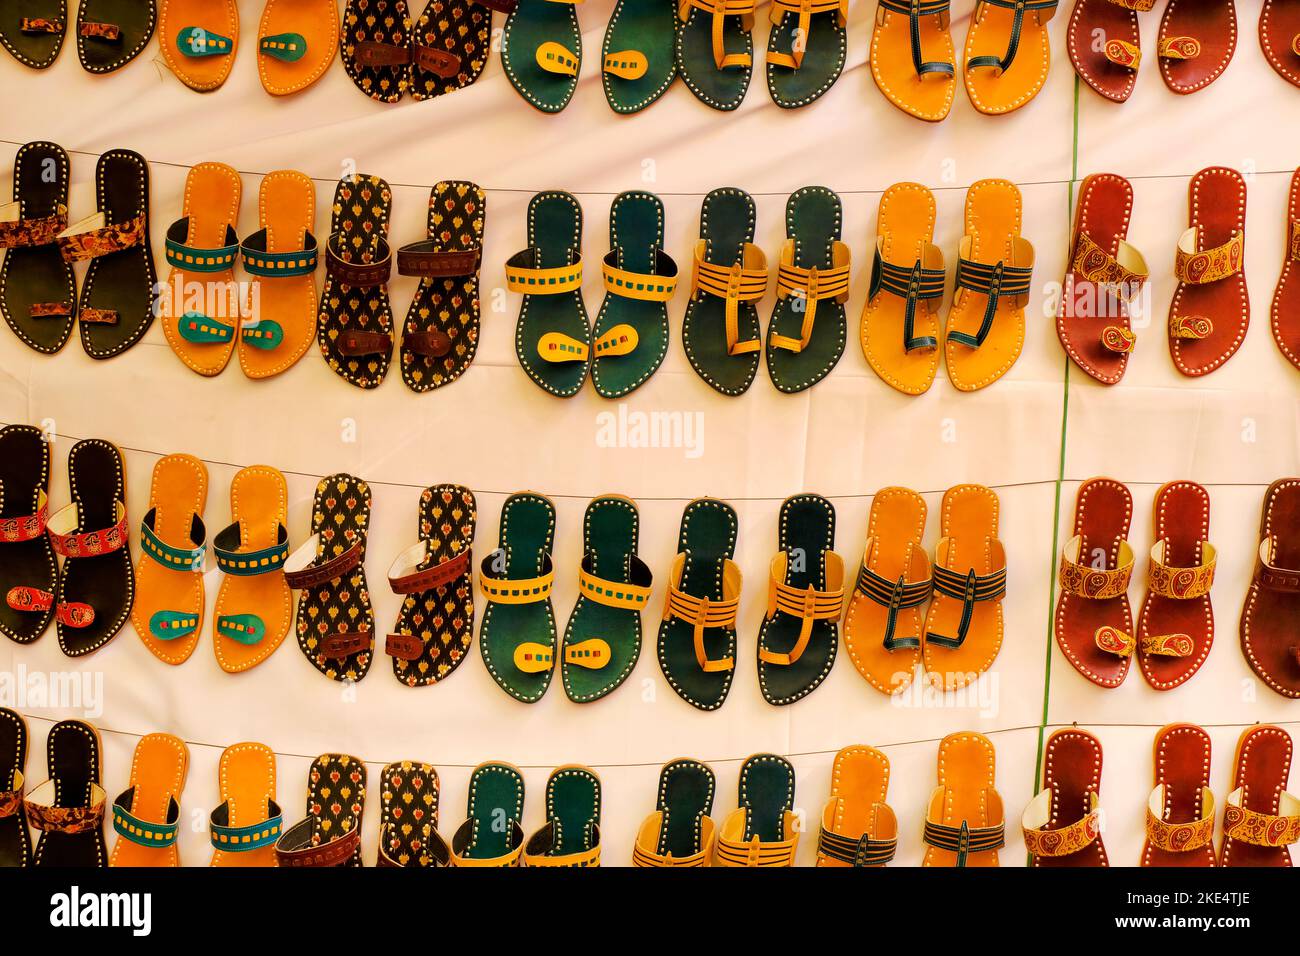 Traditional Indian Footwear, Ethnic Footwear, Popular Indian Footwear